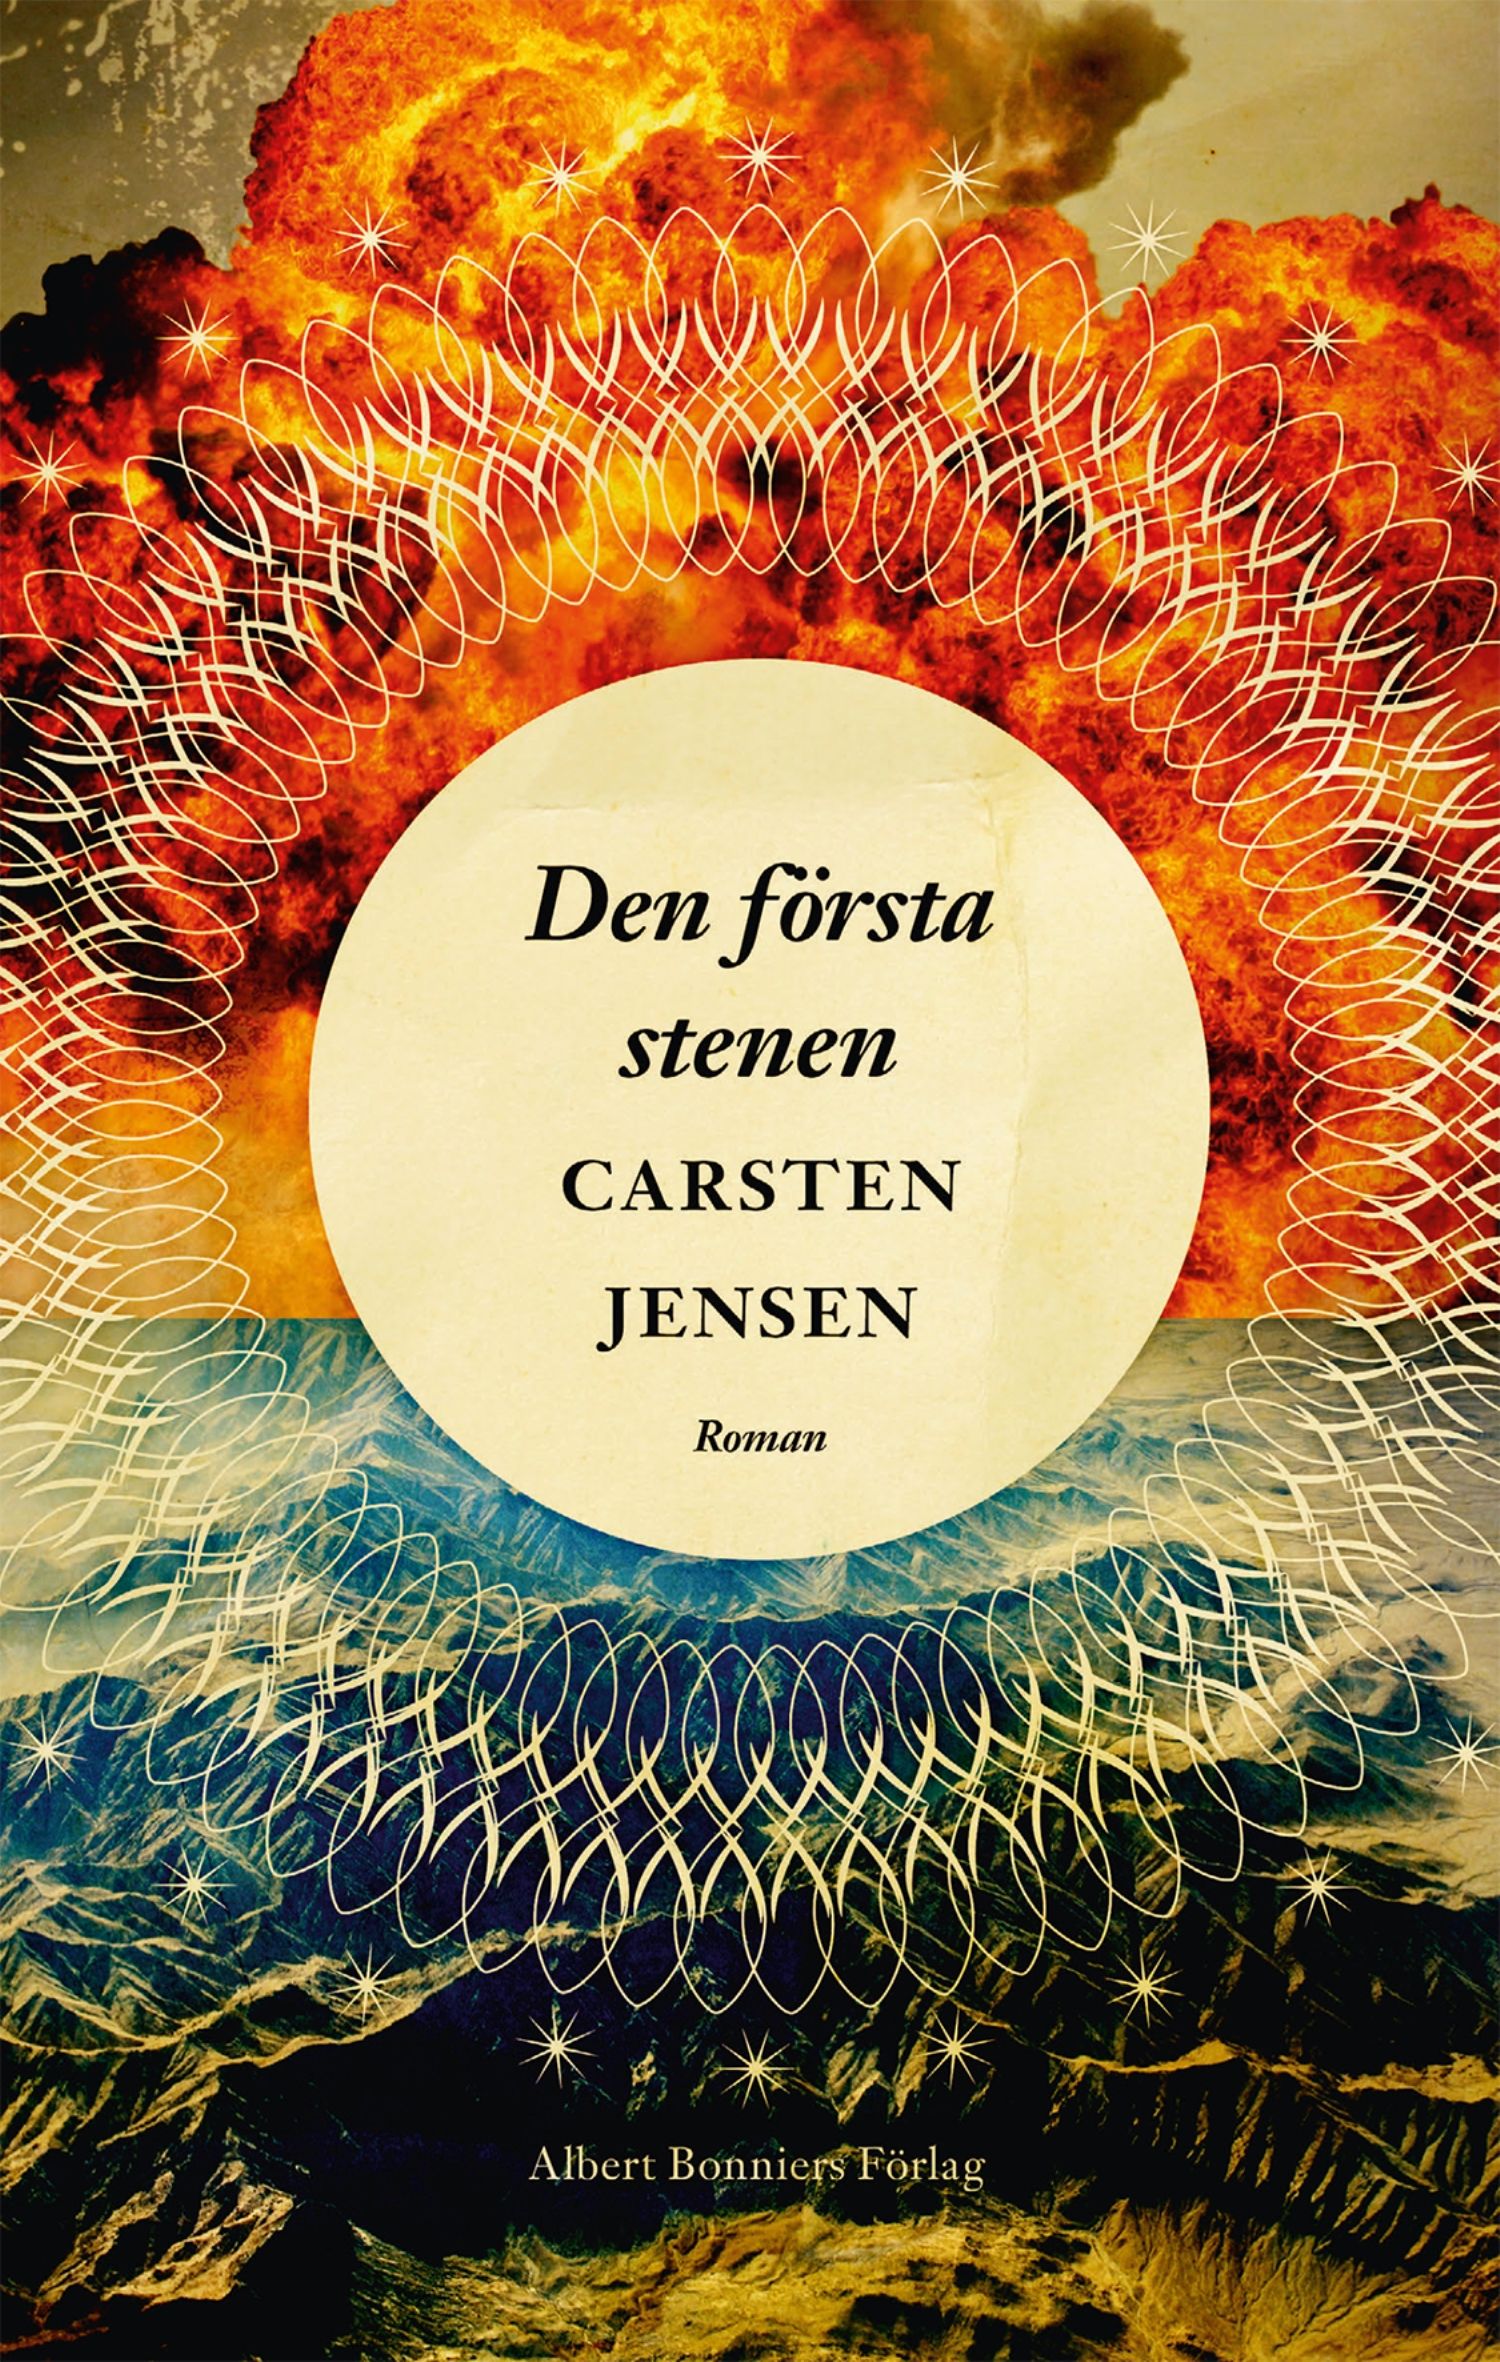 Den första stenen, e-bog af Carsten Jensen